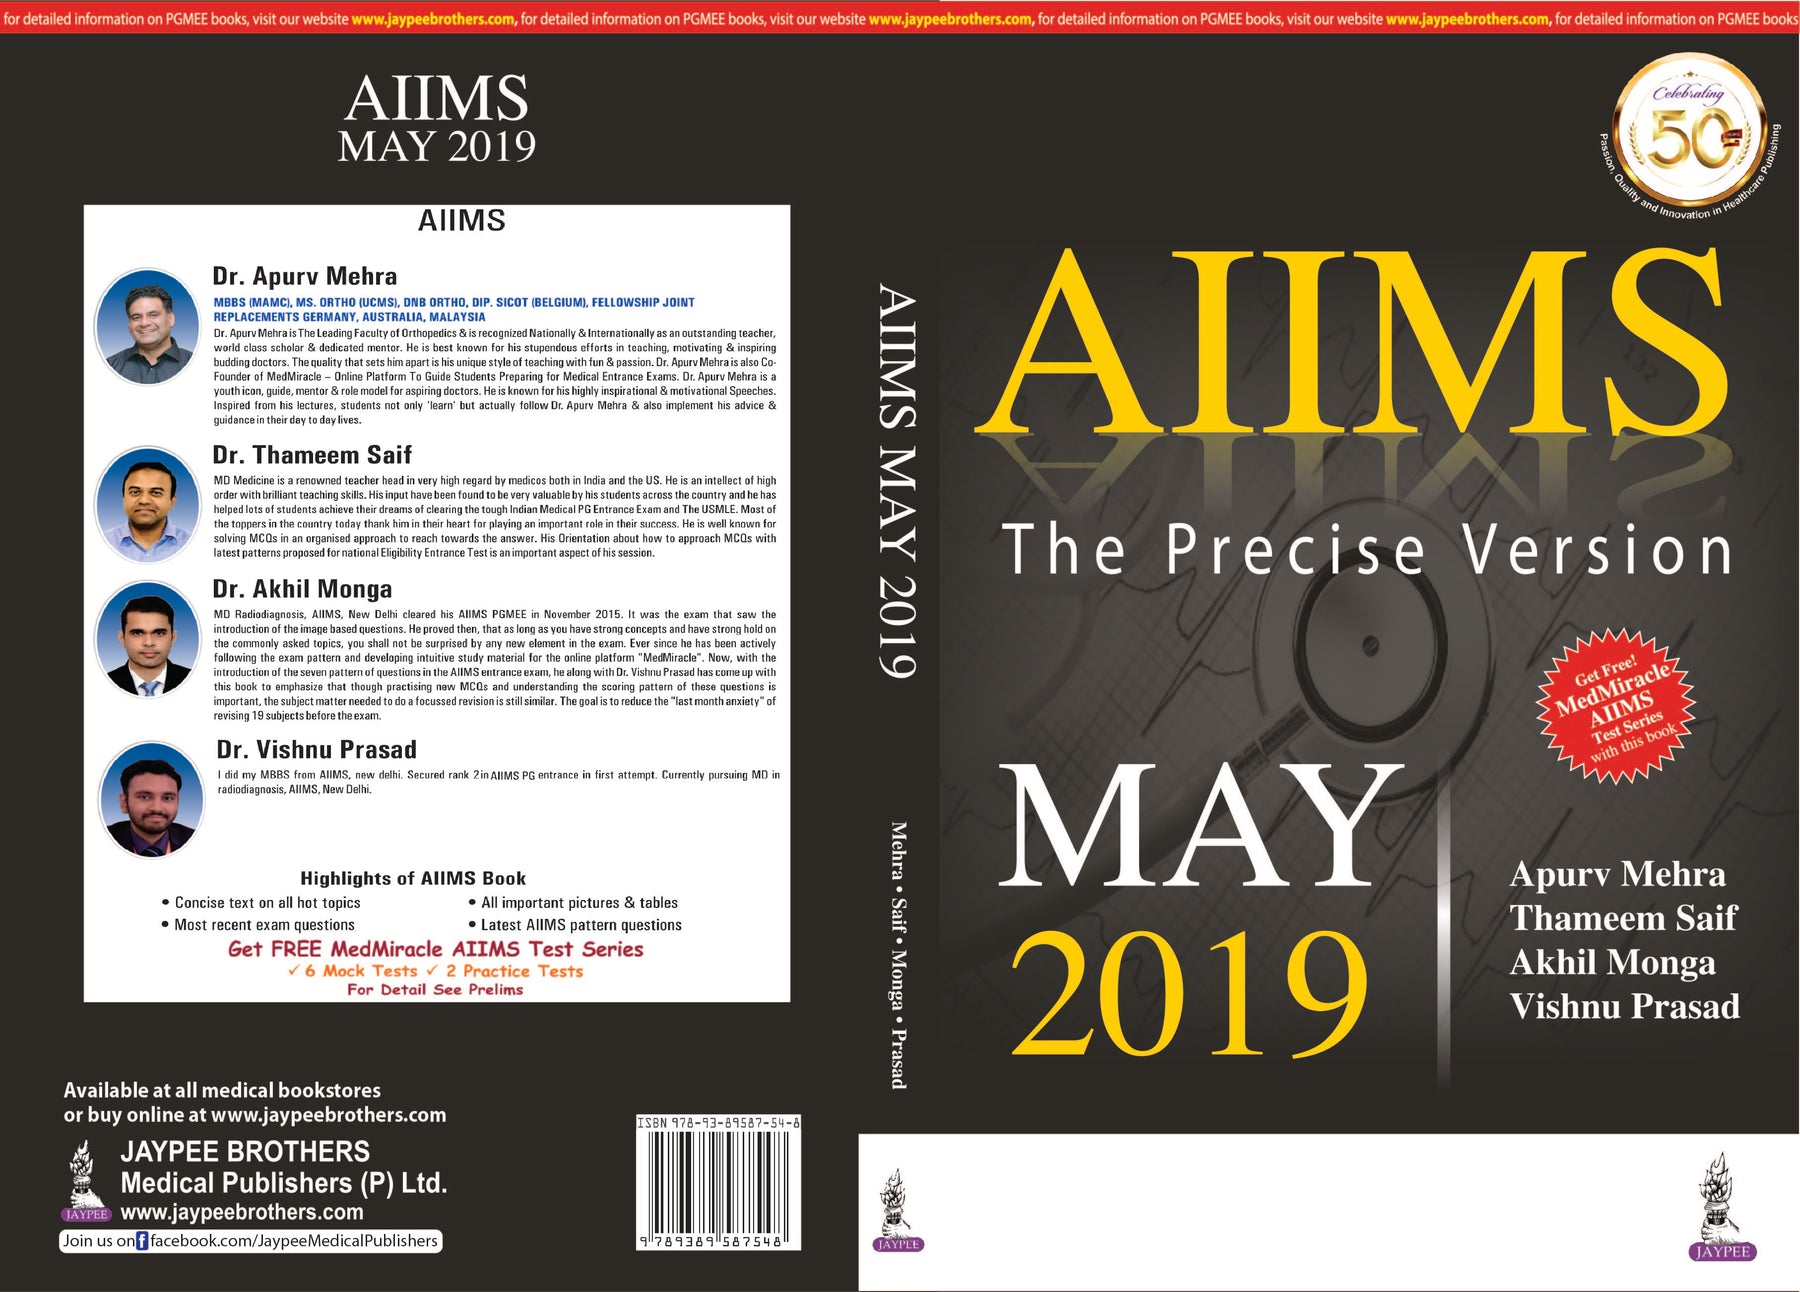 AIIMS: THE PRECISE VERSION MAY 2019
,1/E,APURV MEHRA